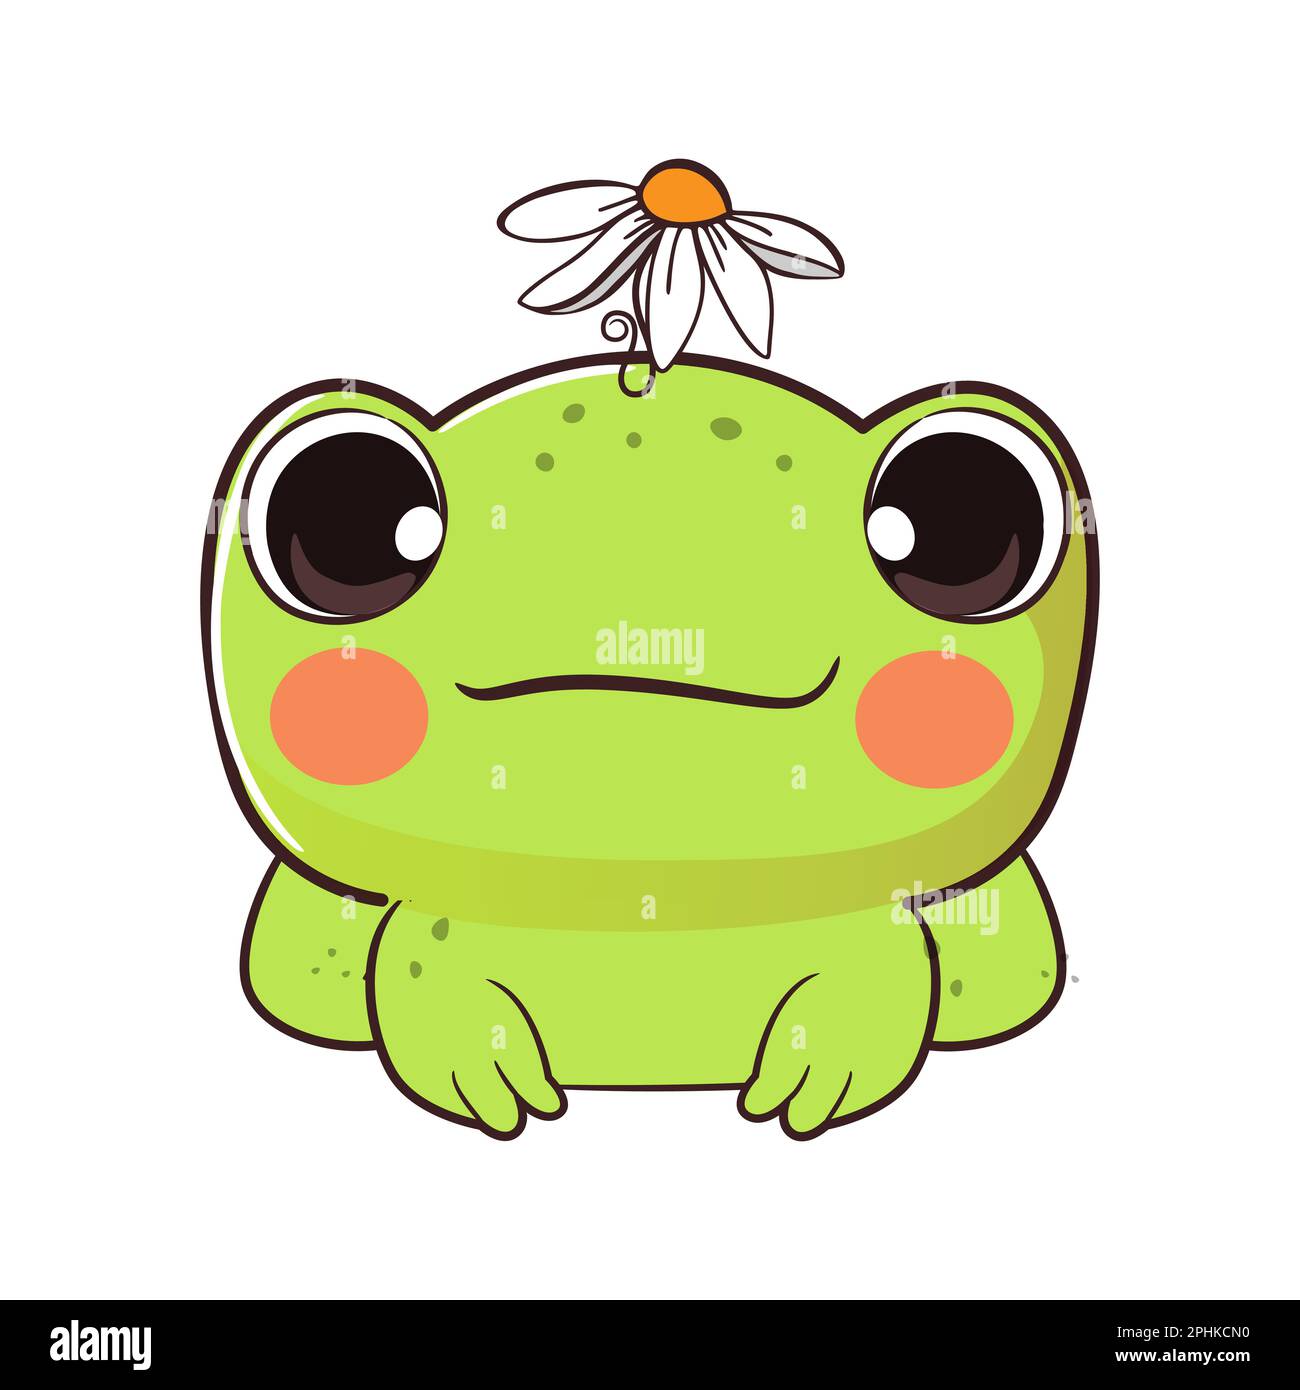 https://c8.alamy.com/comp/2PHKCN0/cute-baby-frog-in-cartoon-style-vector-2PHKCN0.jpg